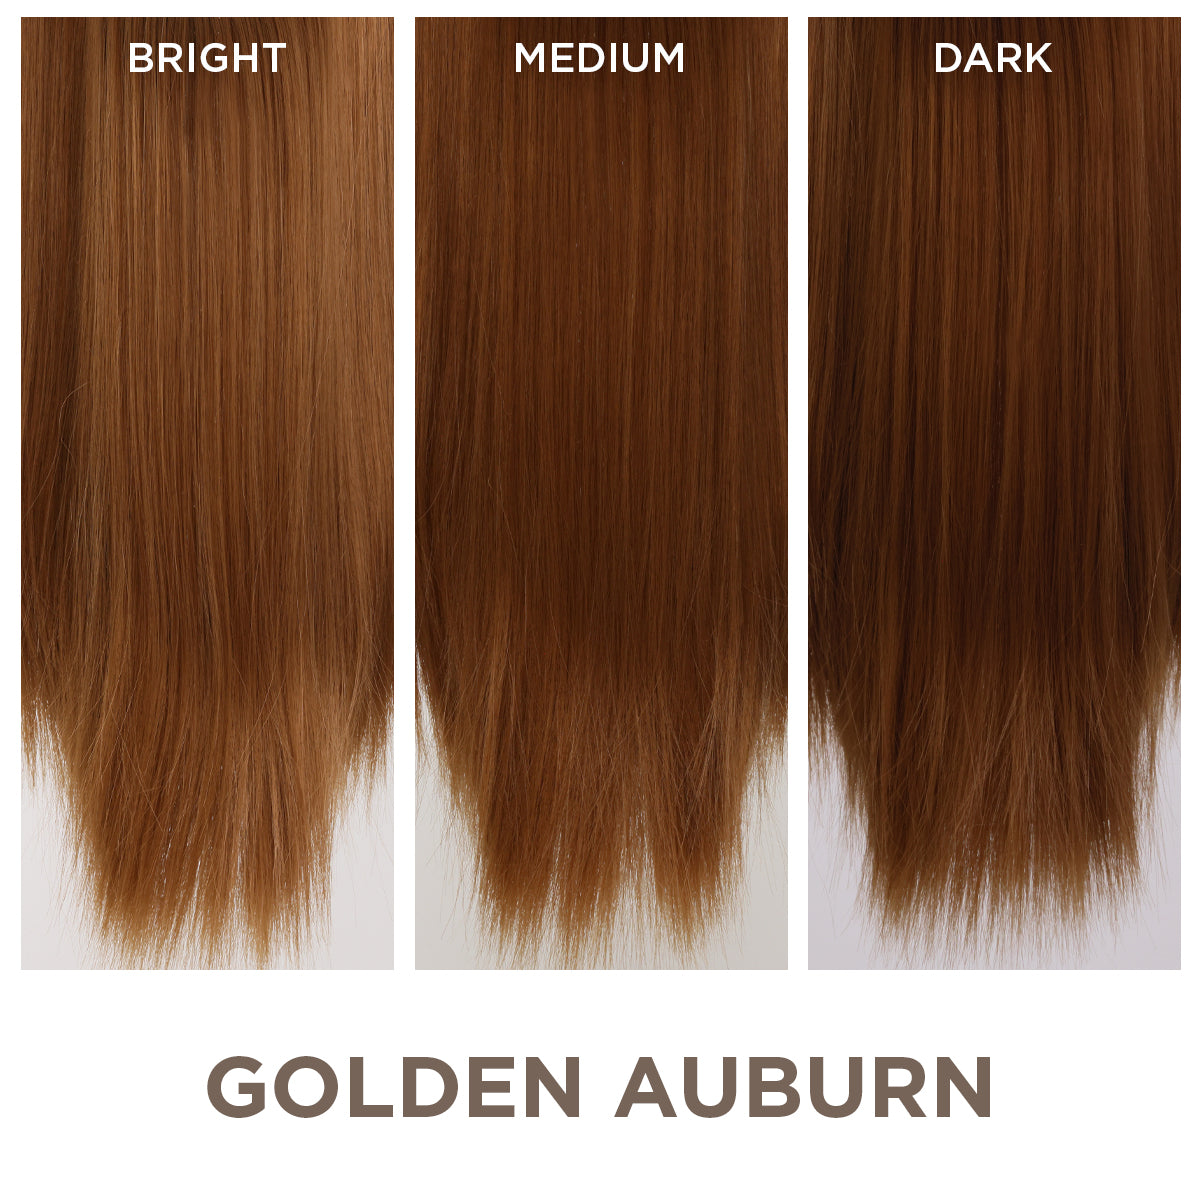 Golden Auburn